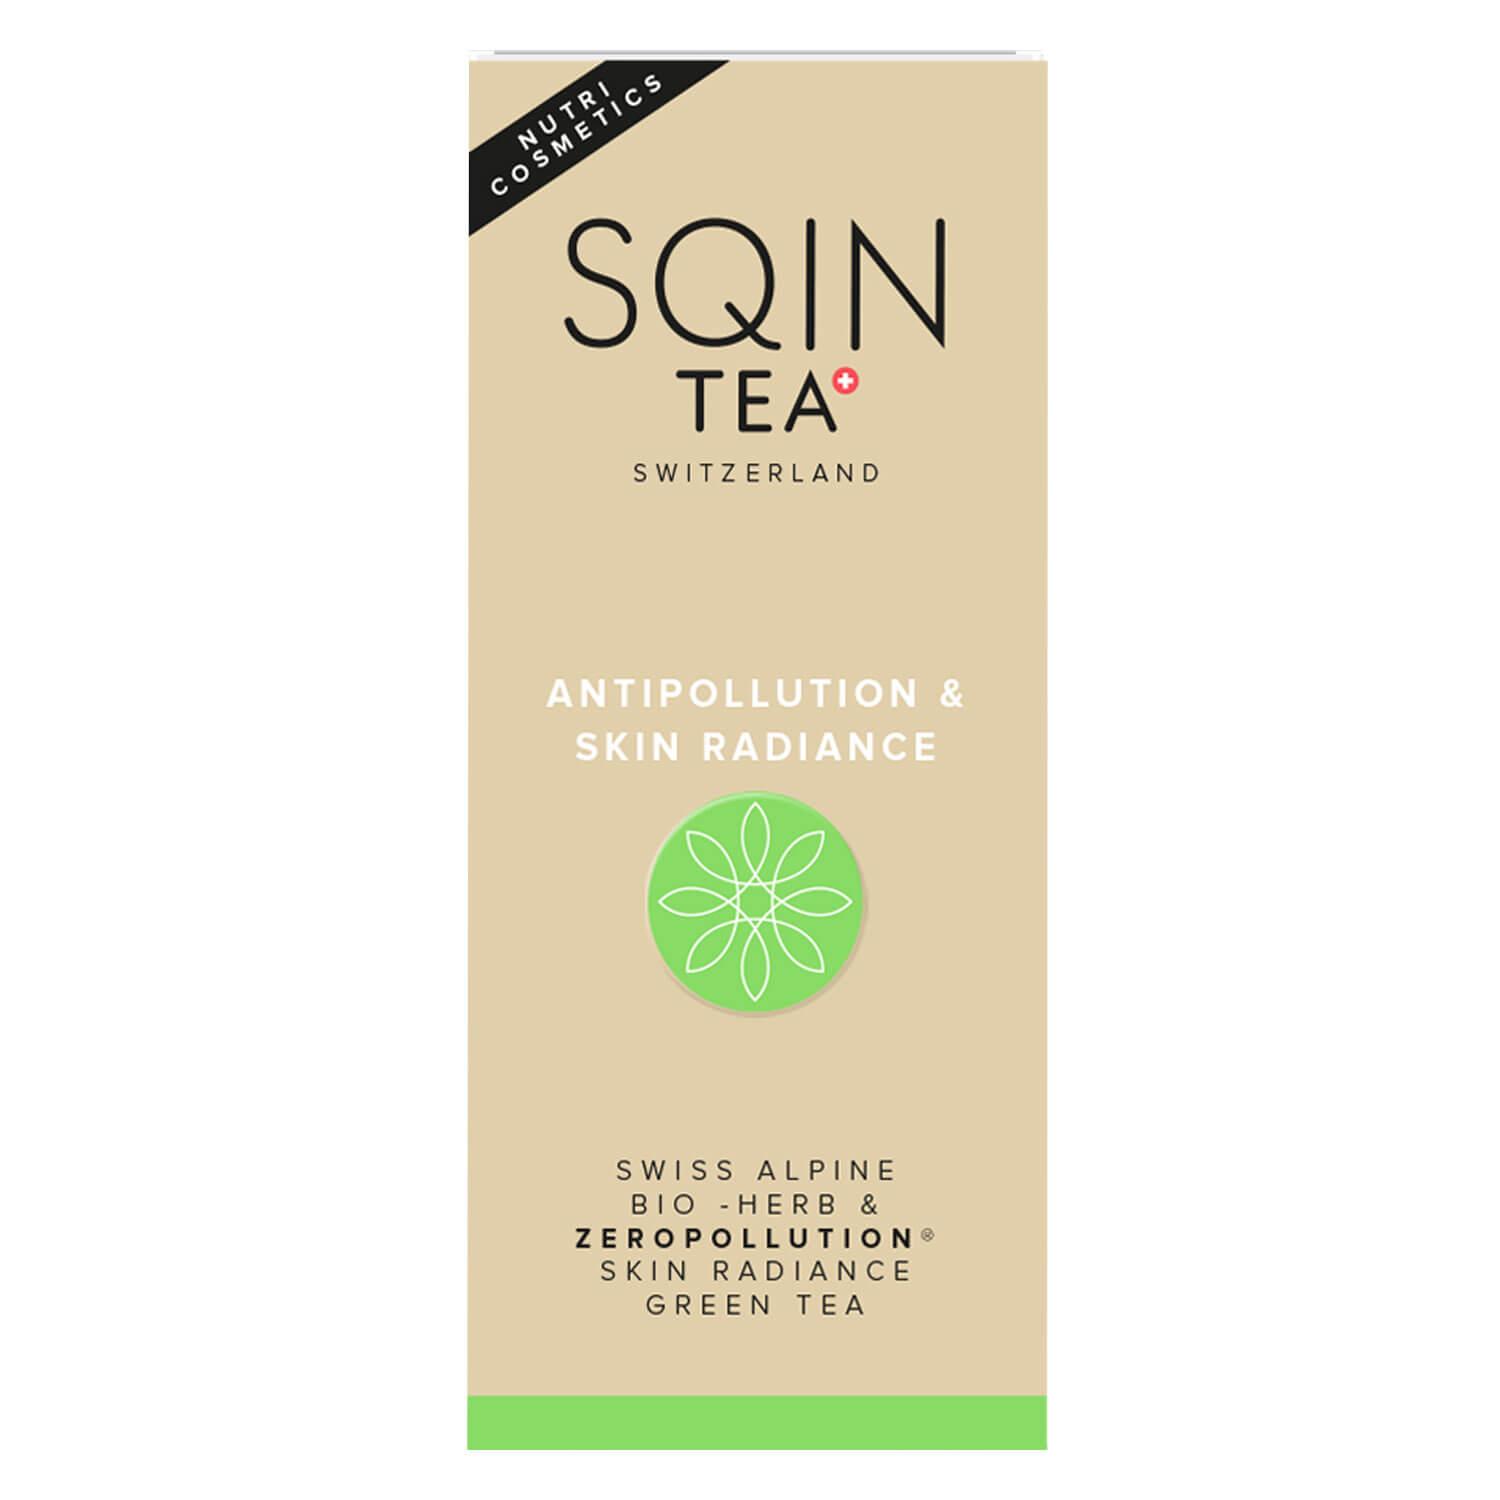 SQINTEA - Antipollution & Skin Radiance